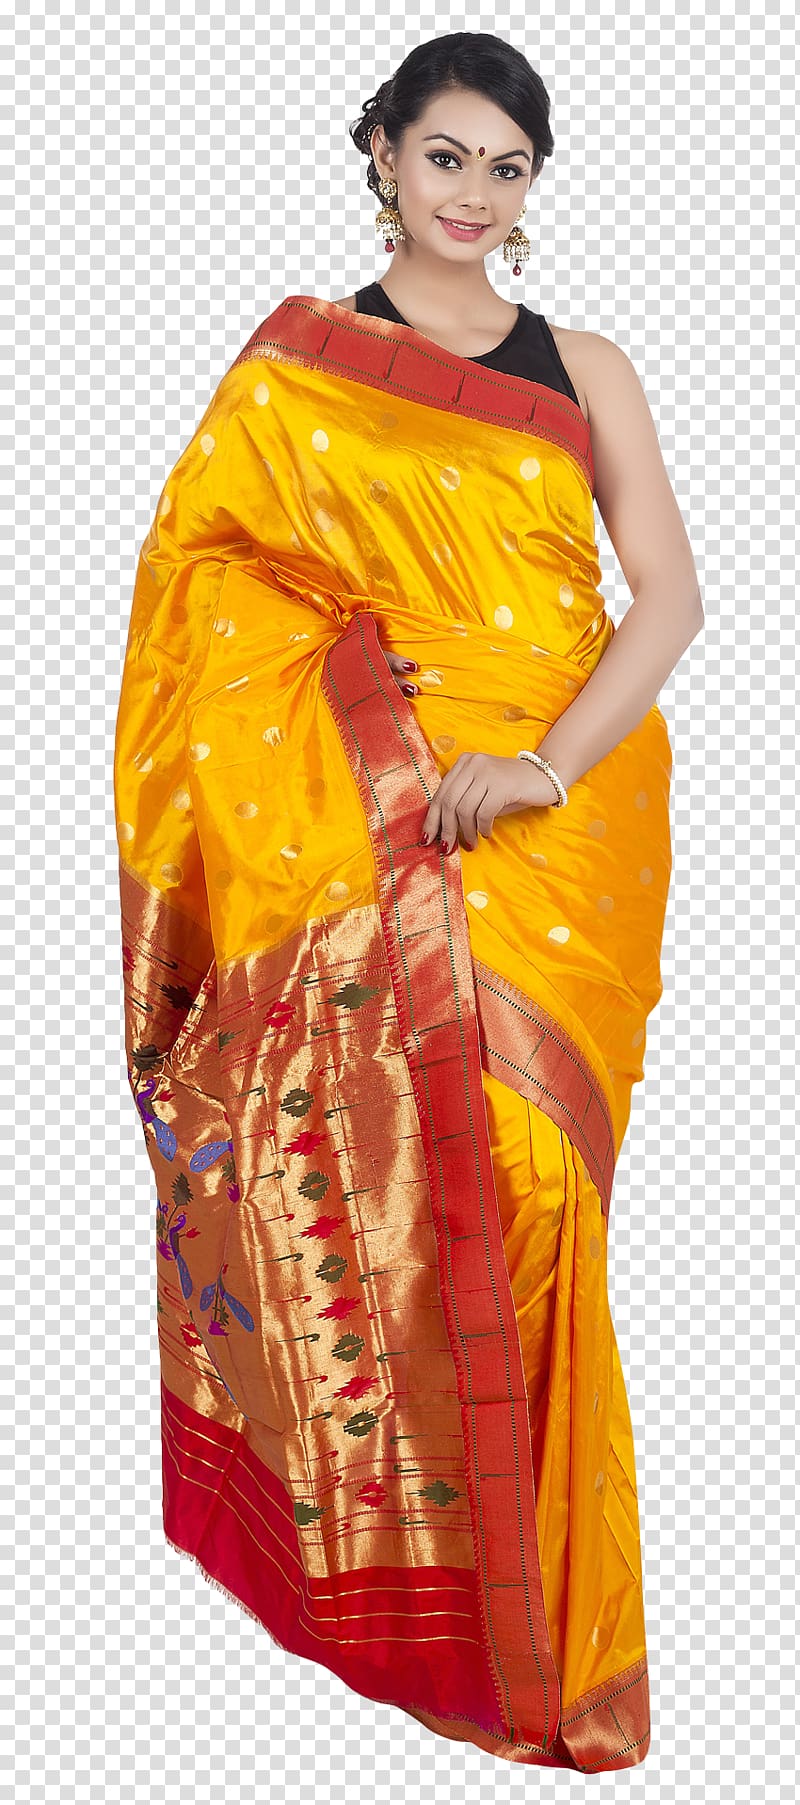 woman wearing orange and red sari, Wedding sari, Wedding Saree transparent background PNG clipart